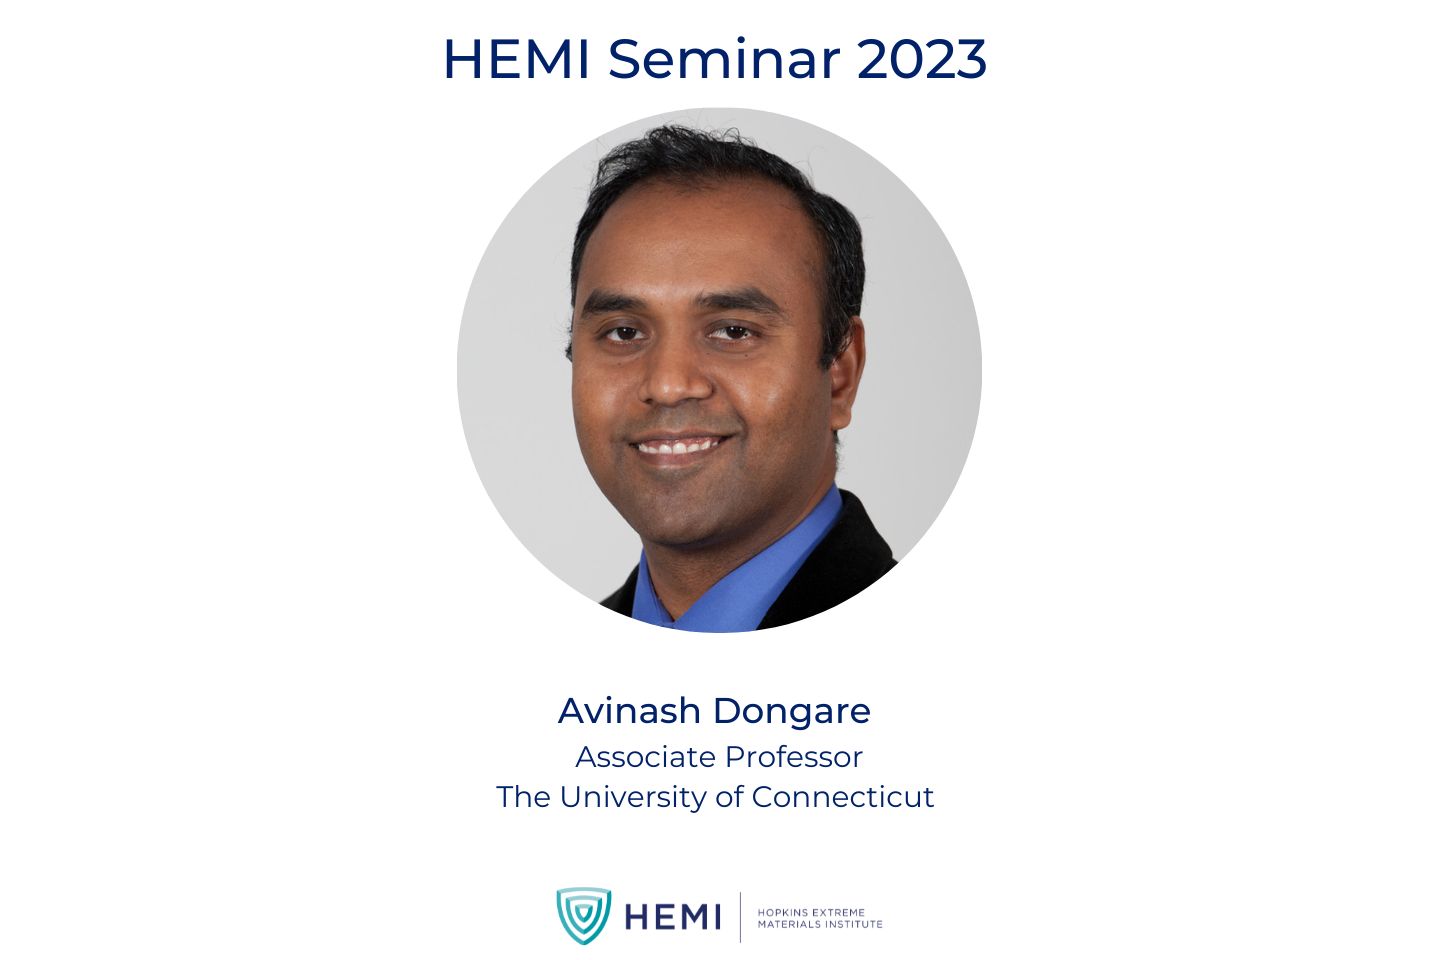 Avinash Dongare headshot and HEMI logo with text: "HEMI Seminar 2023, Avinash Dongare, Associate Professor, The University of Connecticut"